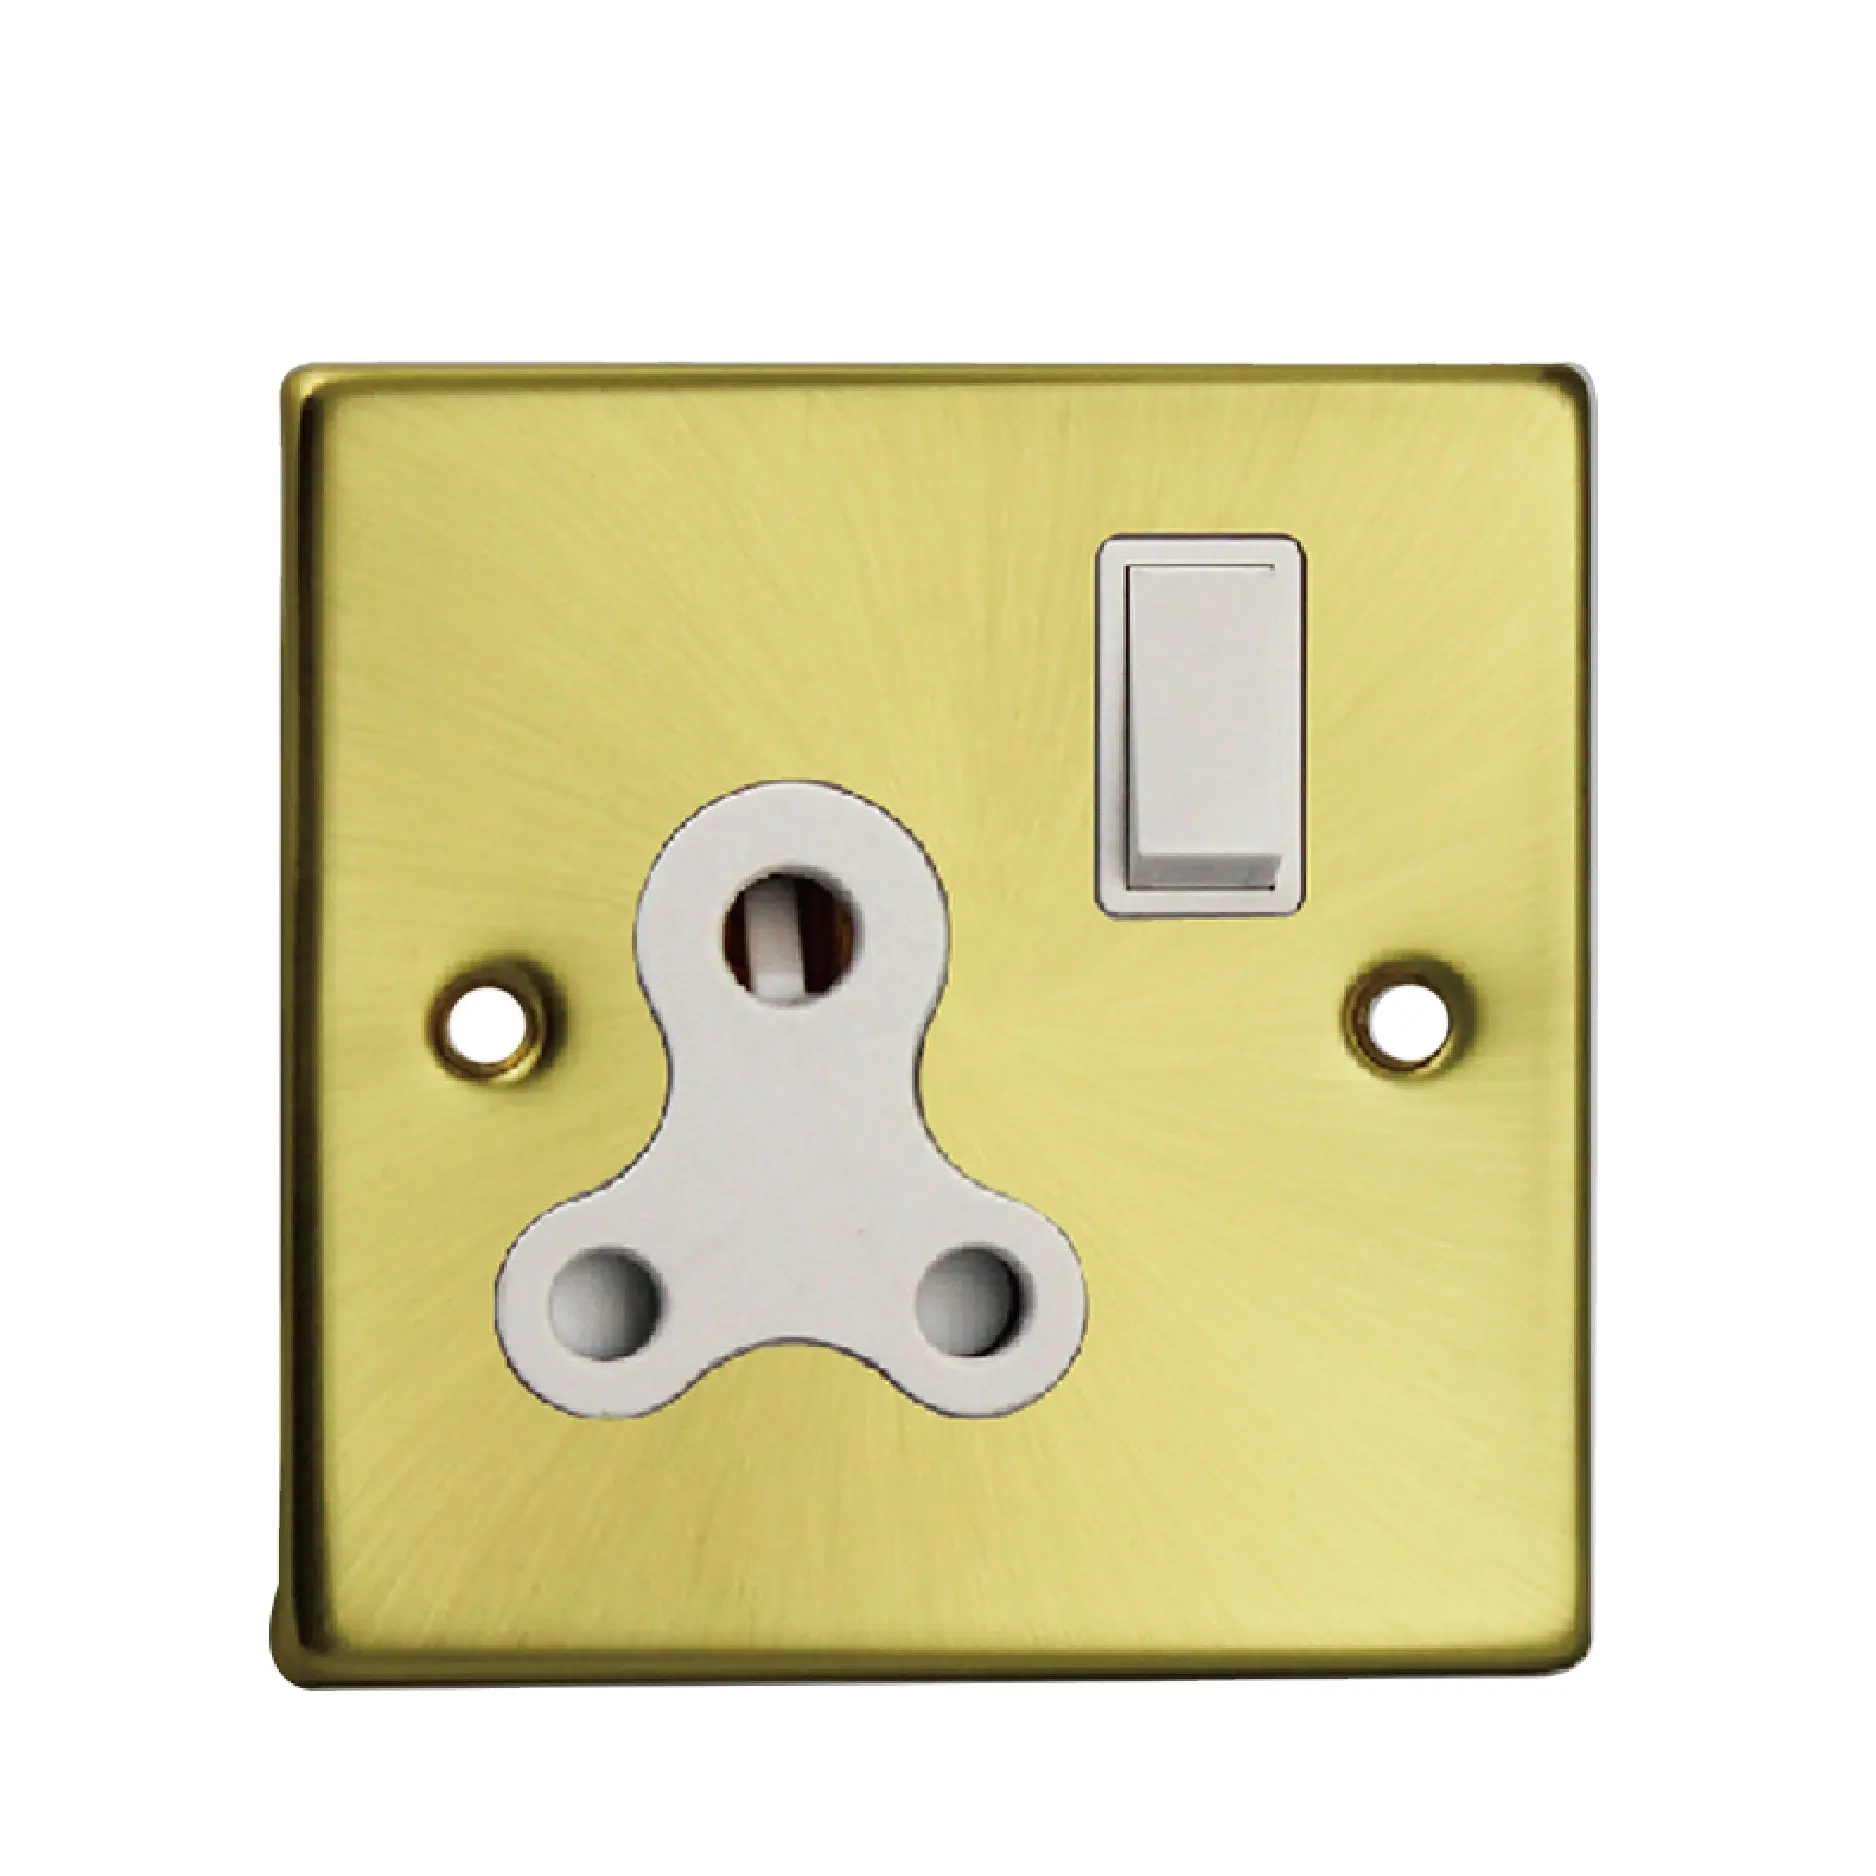 SHINELITE new design good quality metal round pin socket